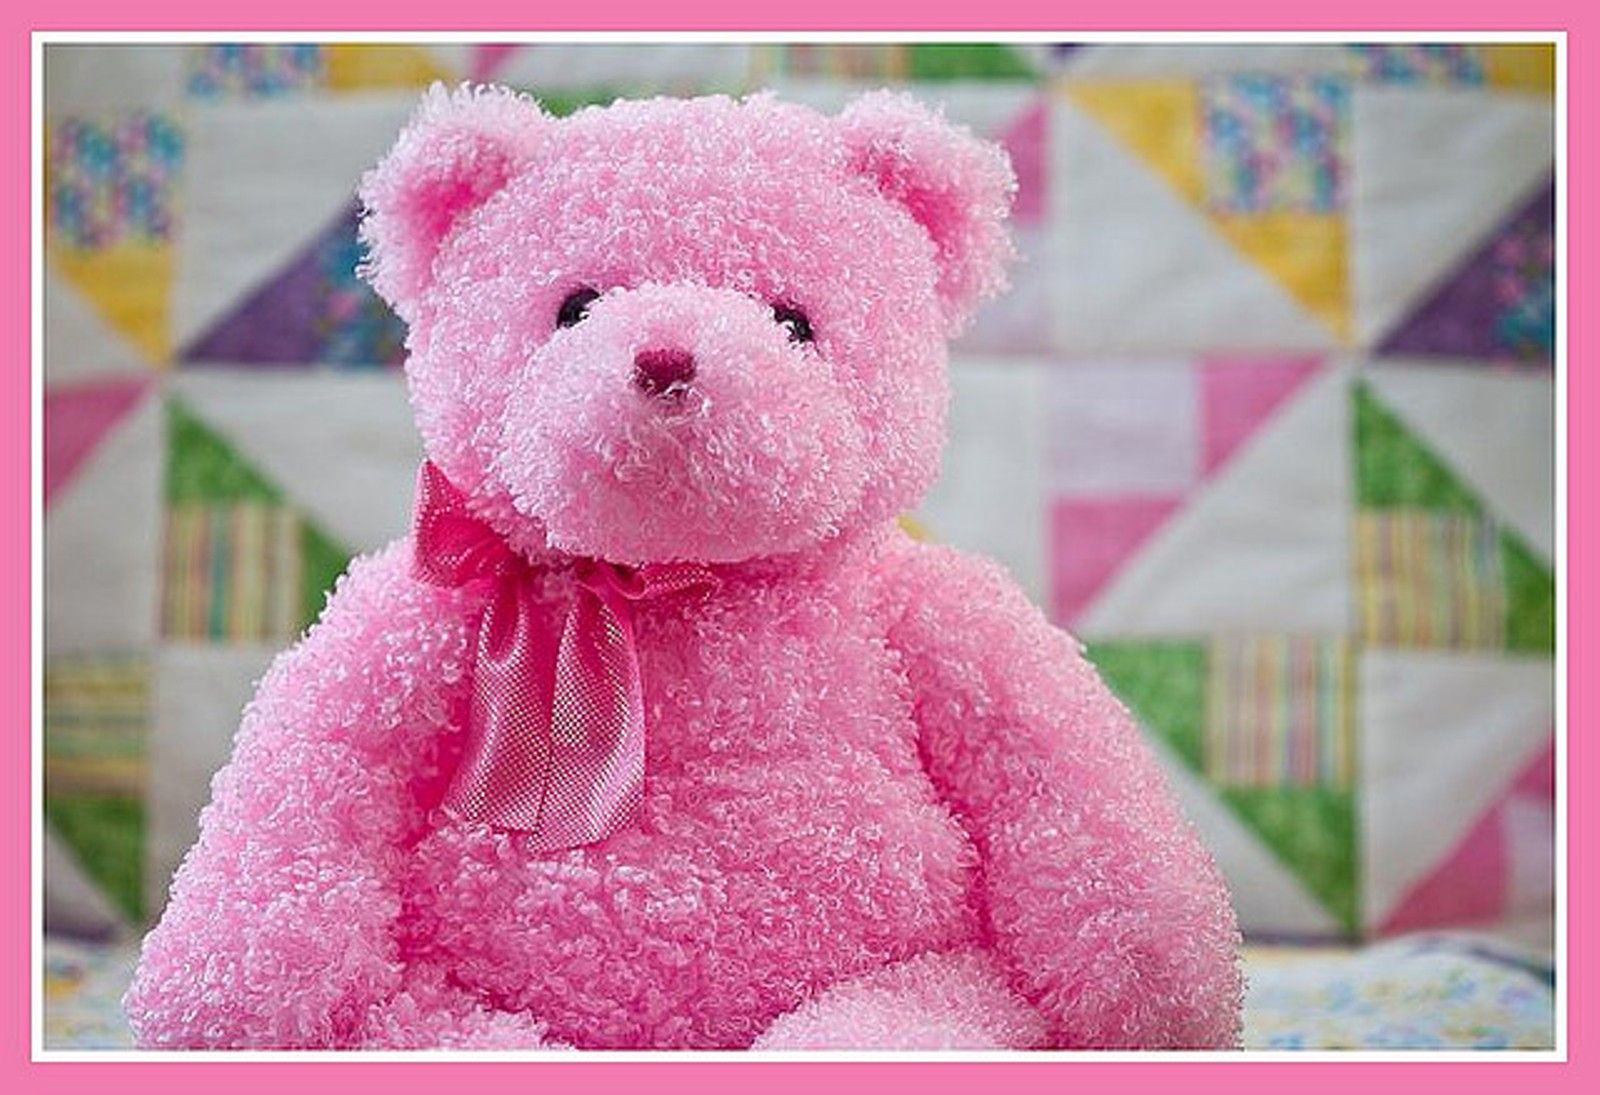 Cute-Pink-Teddy-Bear-Wallpapers-For-Mobile-1.jpg